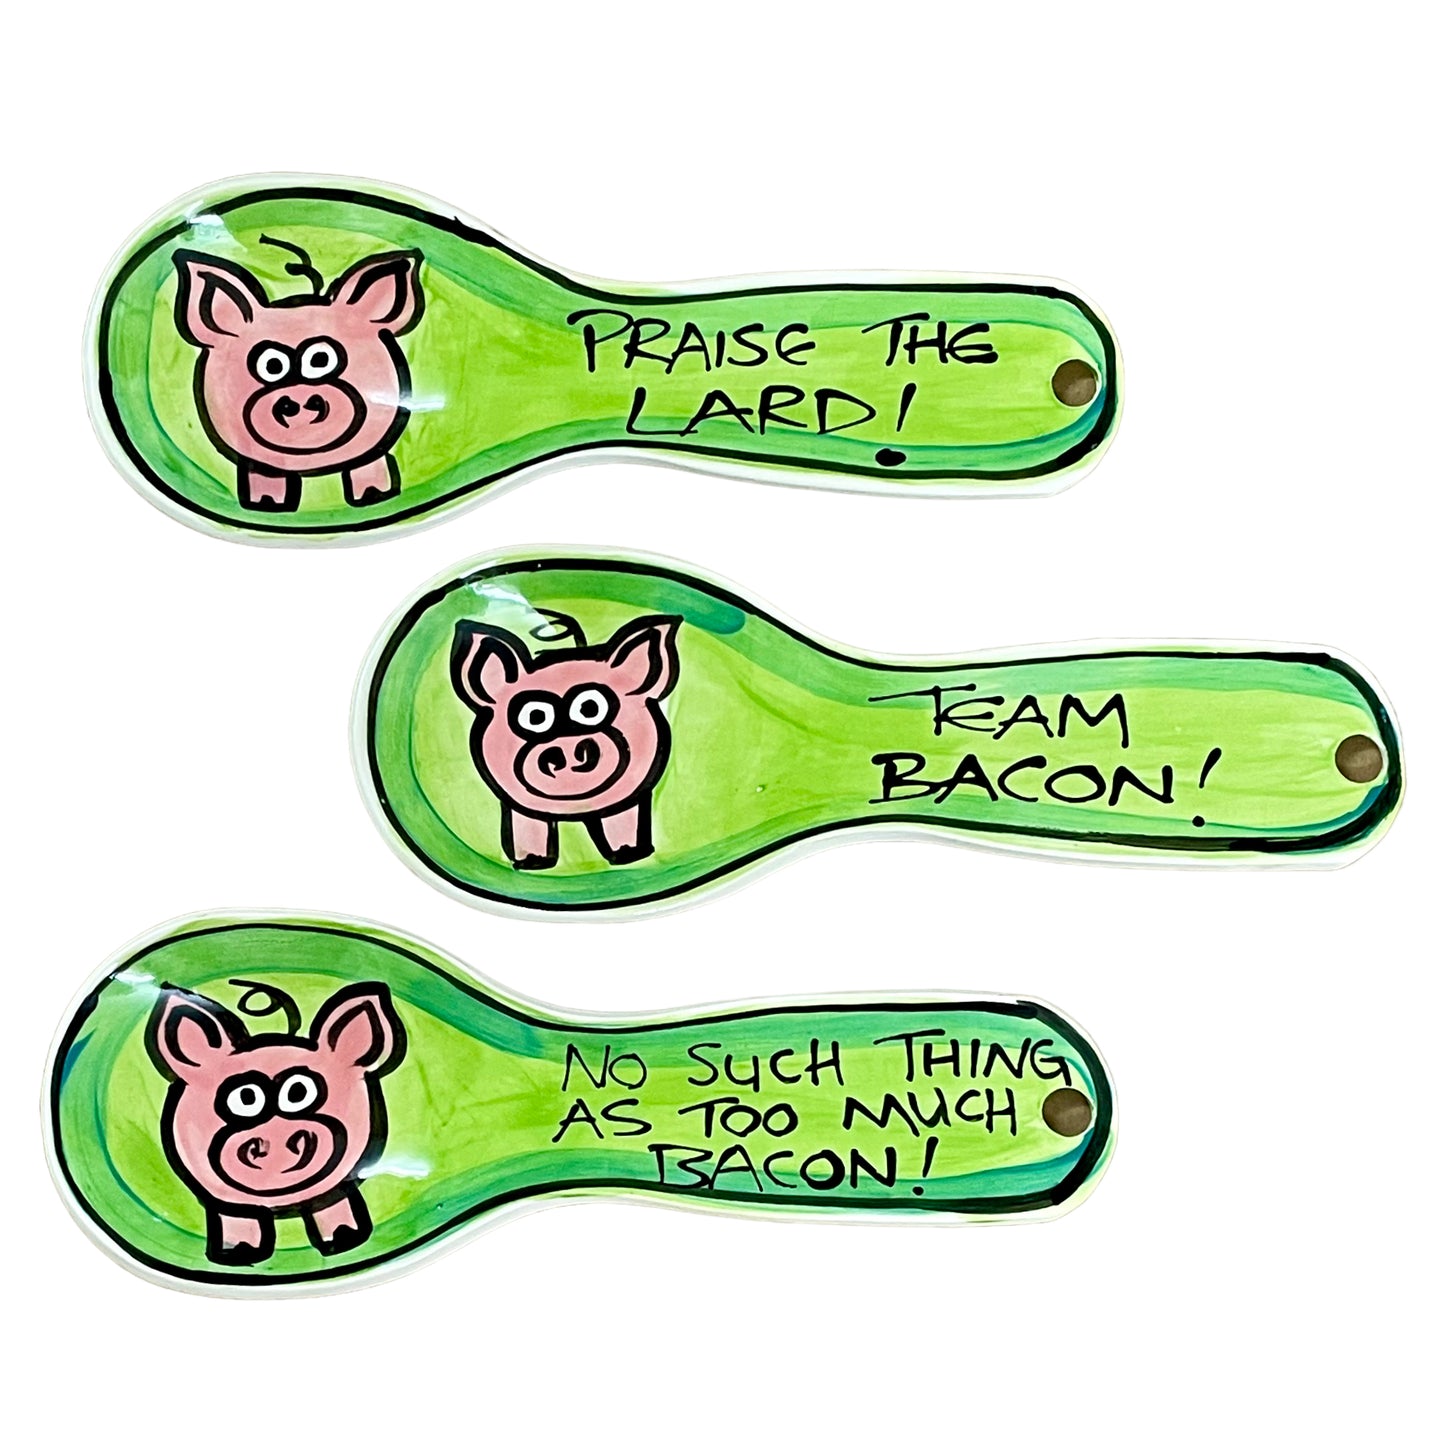 Pig spoon rest (various)